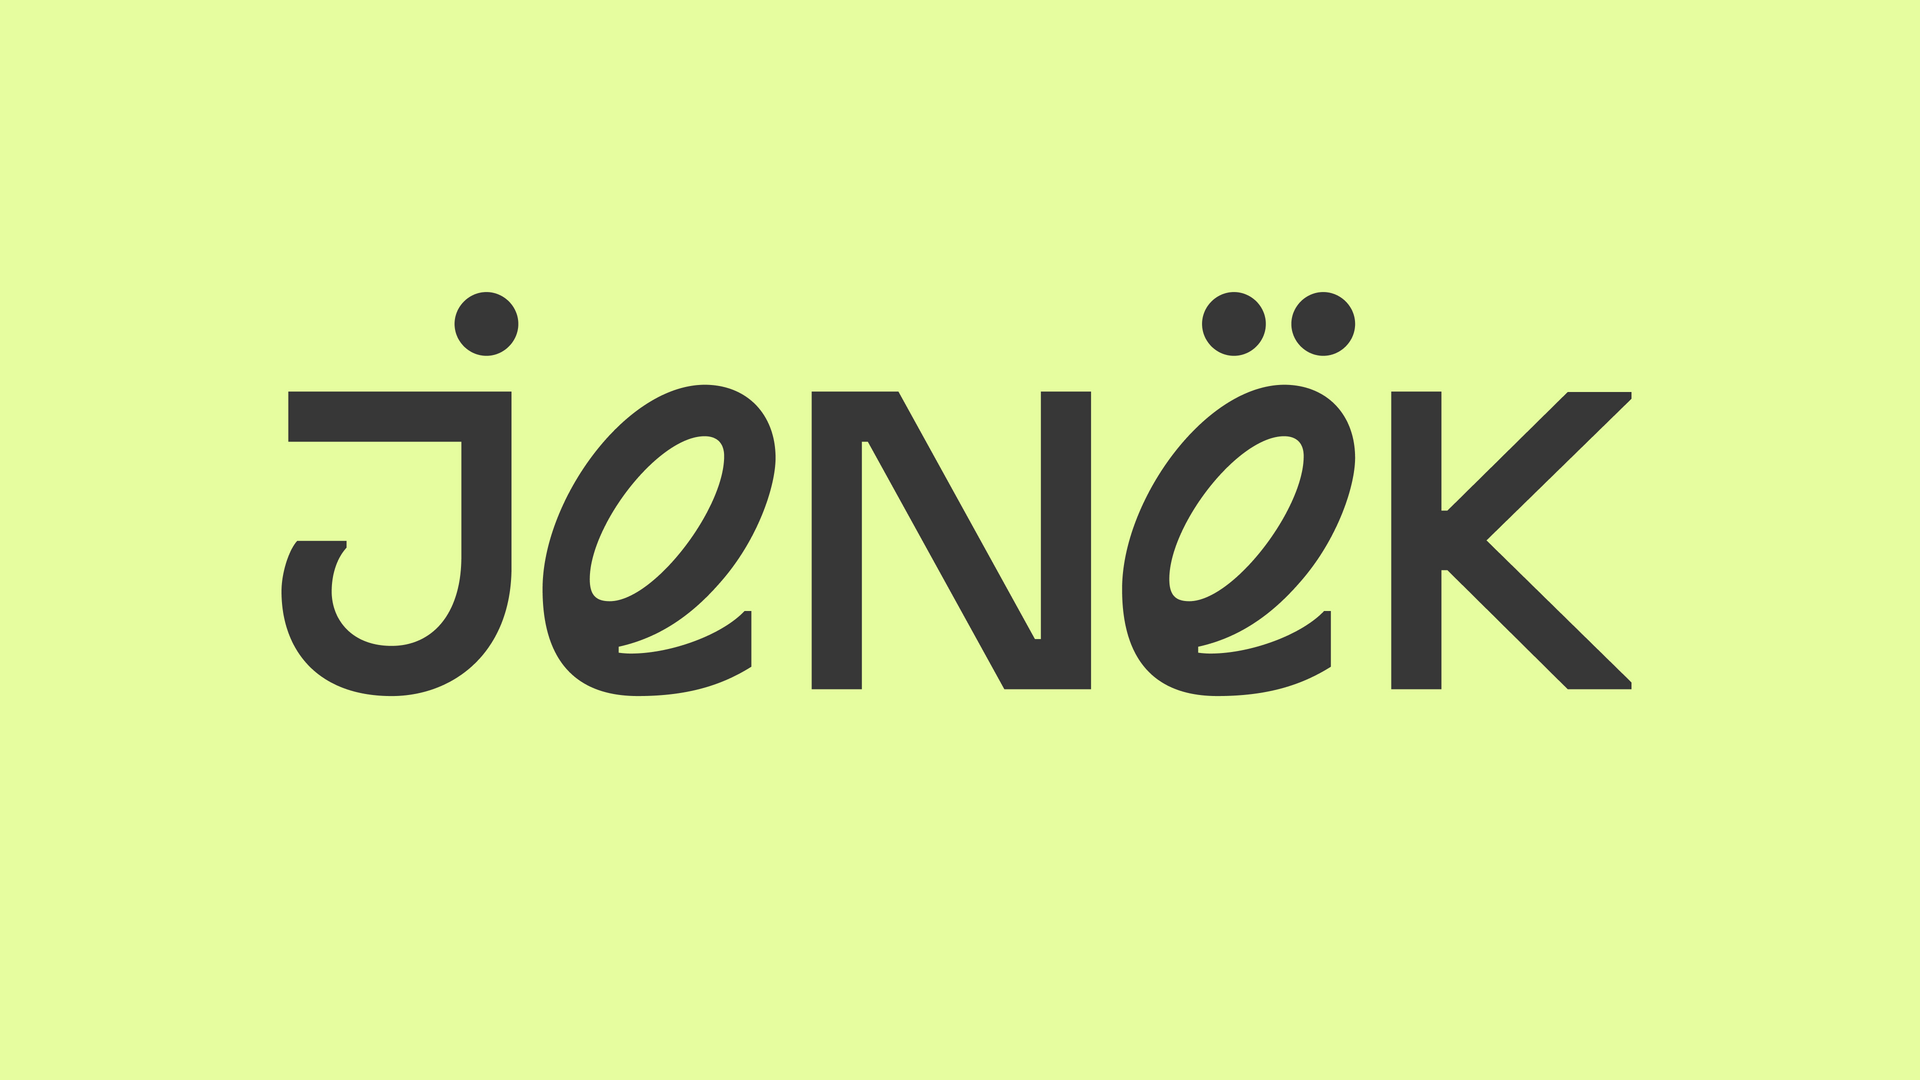 Jenёk